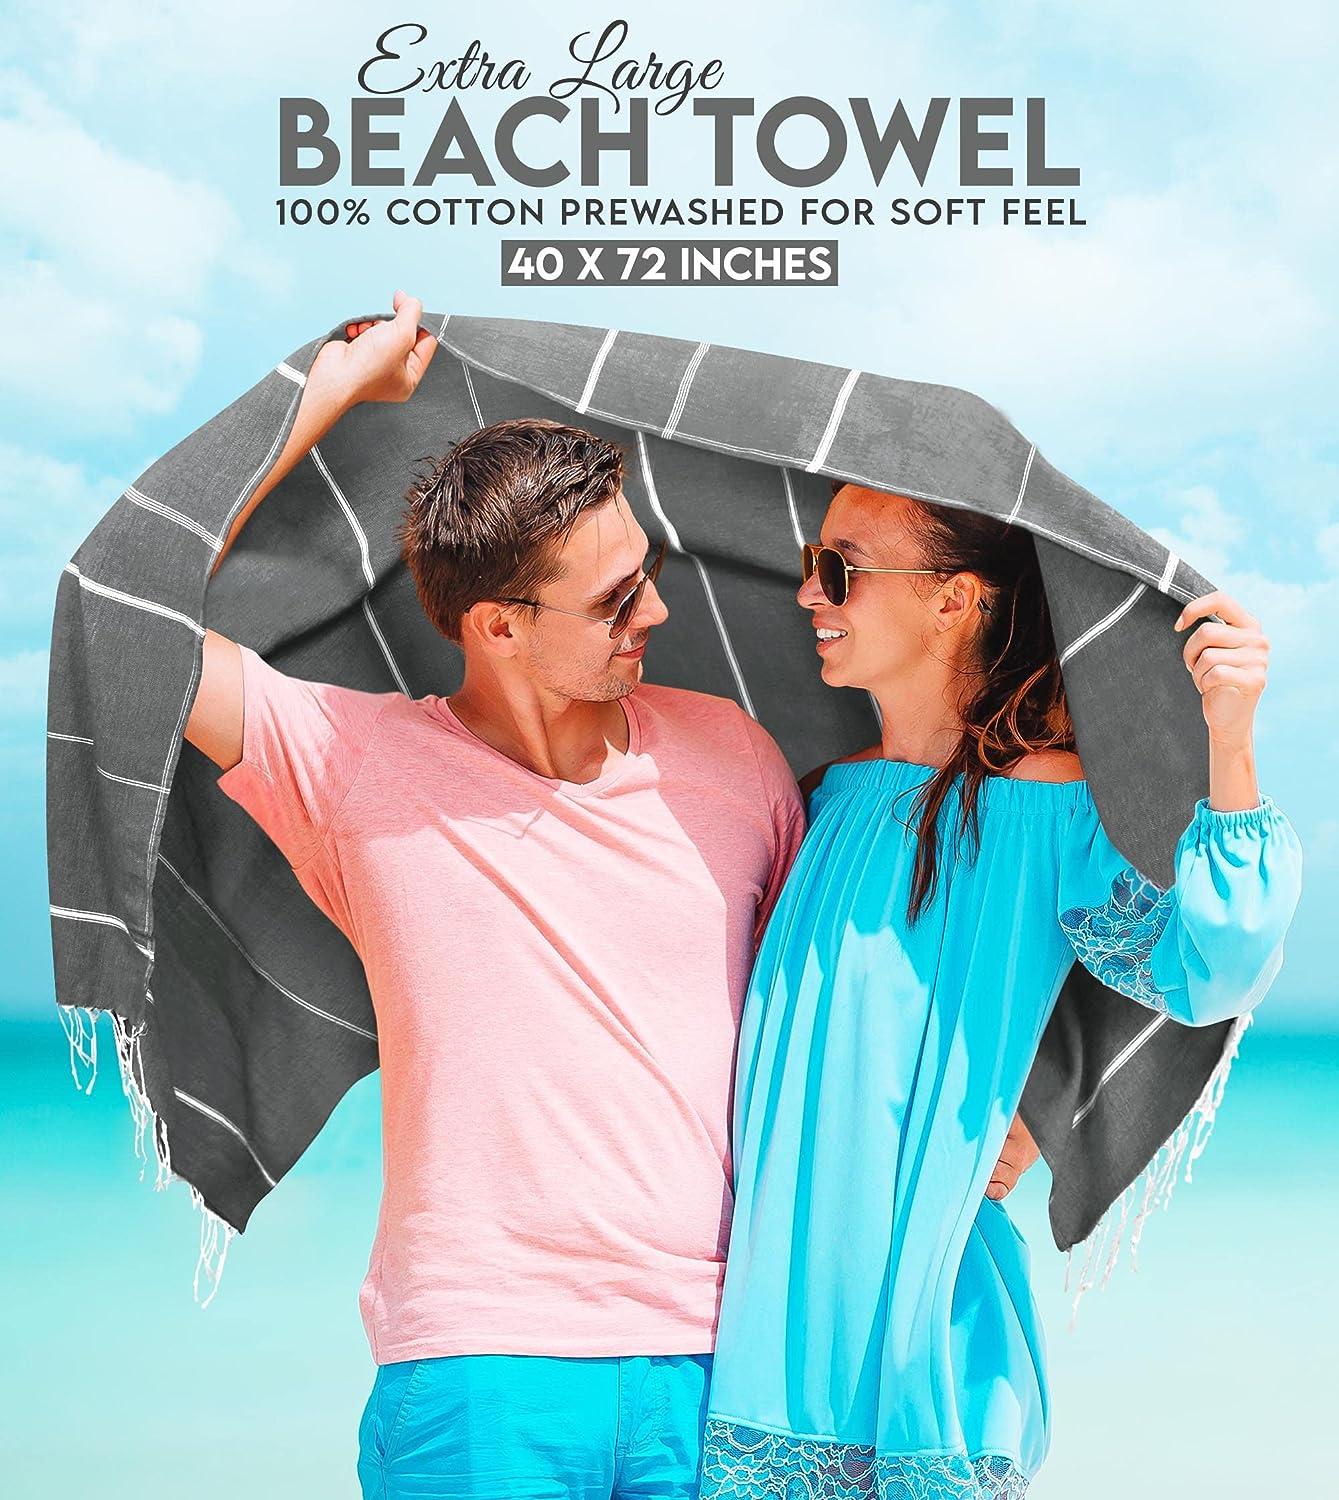 Turkish Large Beach Towel, Oversized Sand Free Quick Dry Swimming